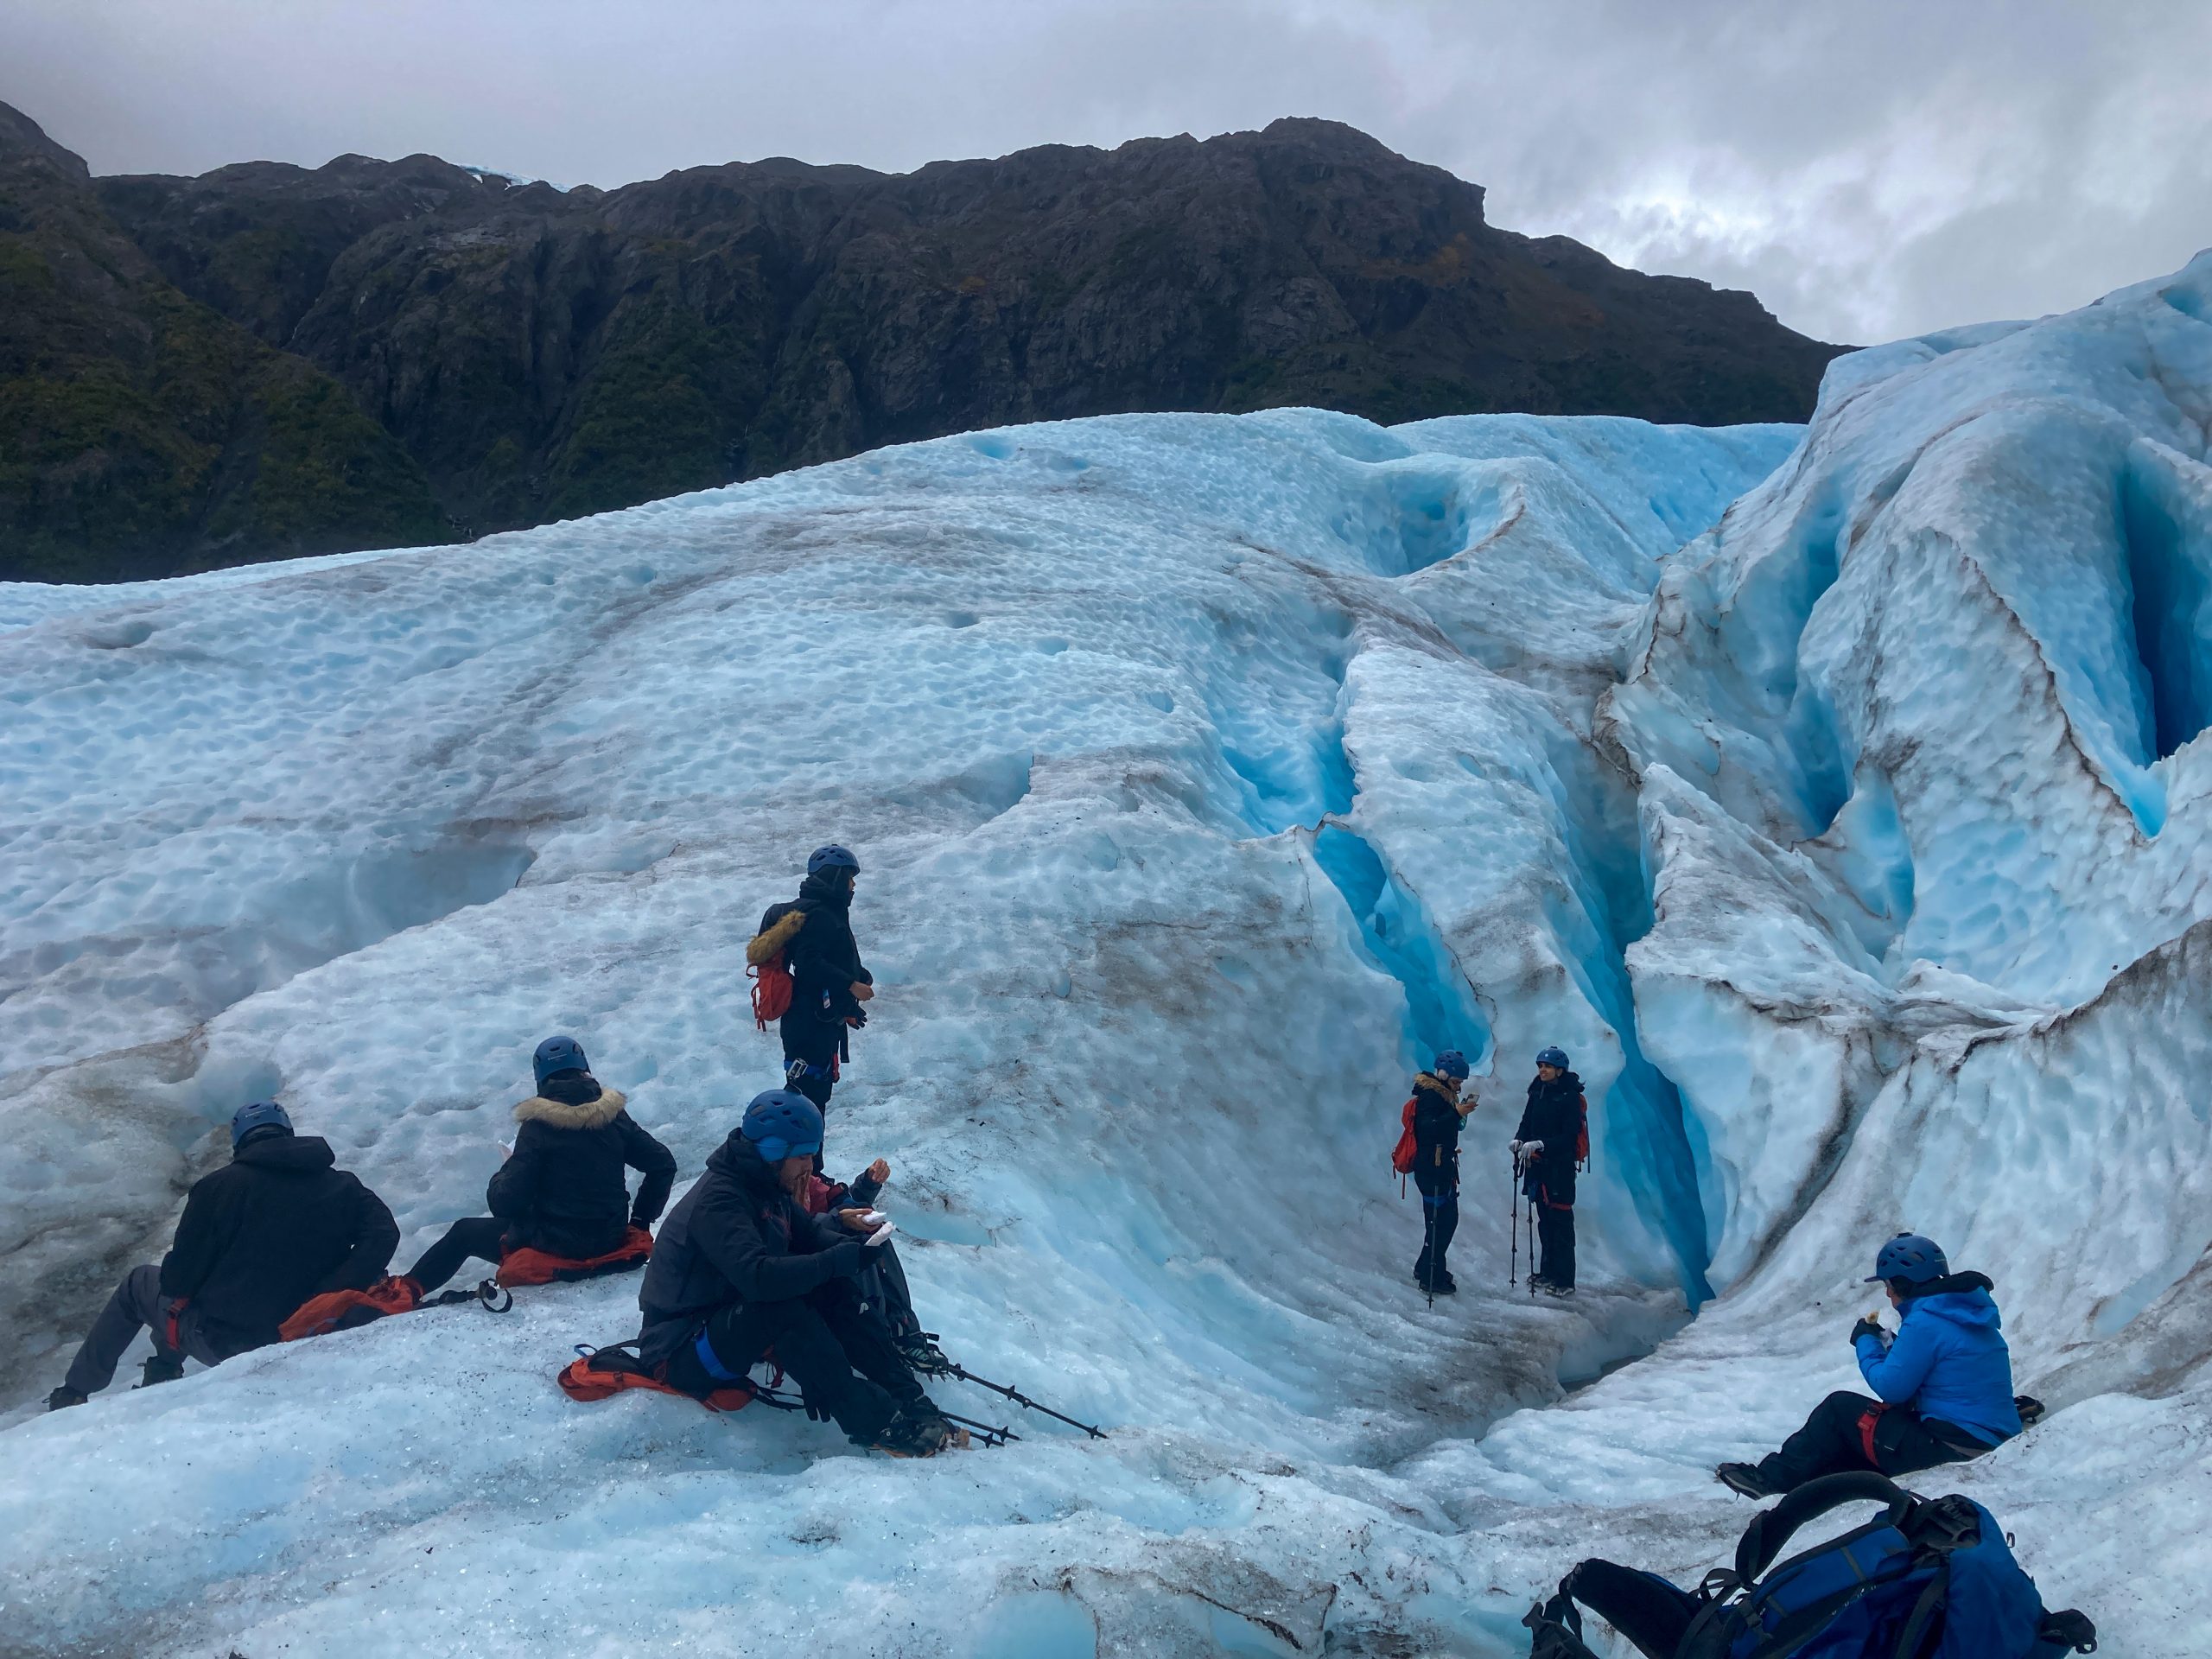 TRIP REPORT: 9/16/22 Exit Glacier Ice Hiking Adventures